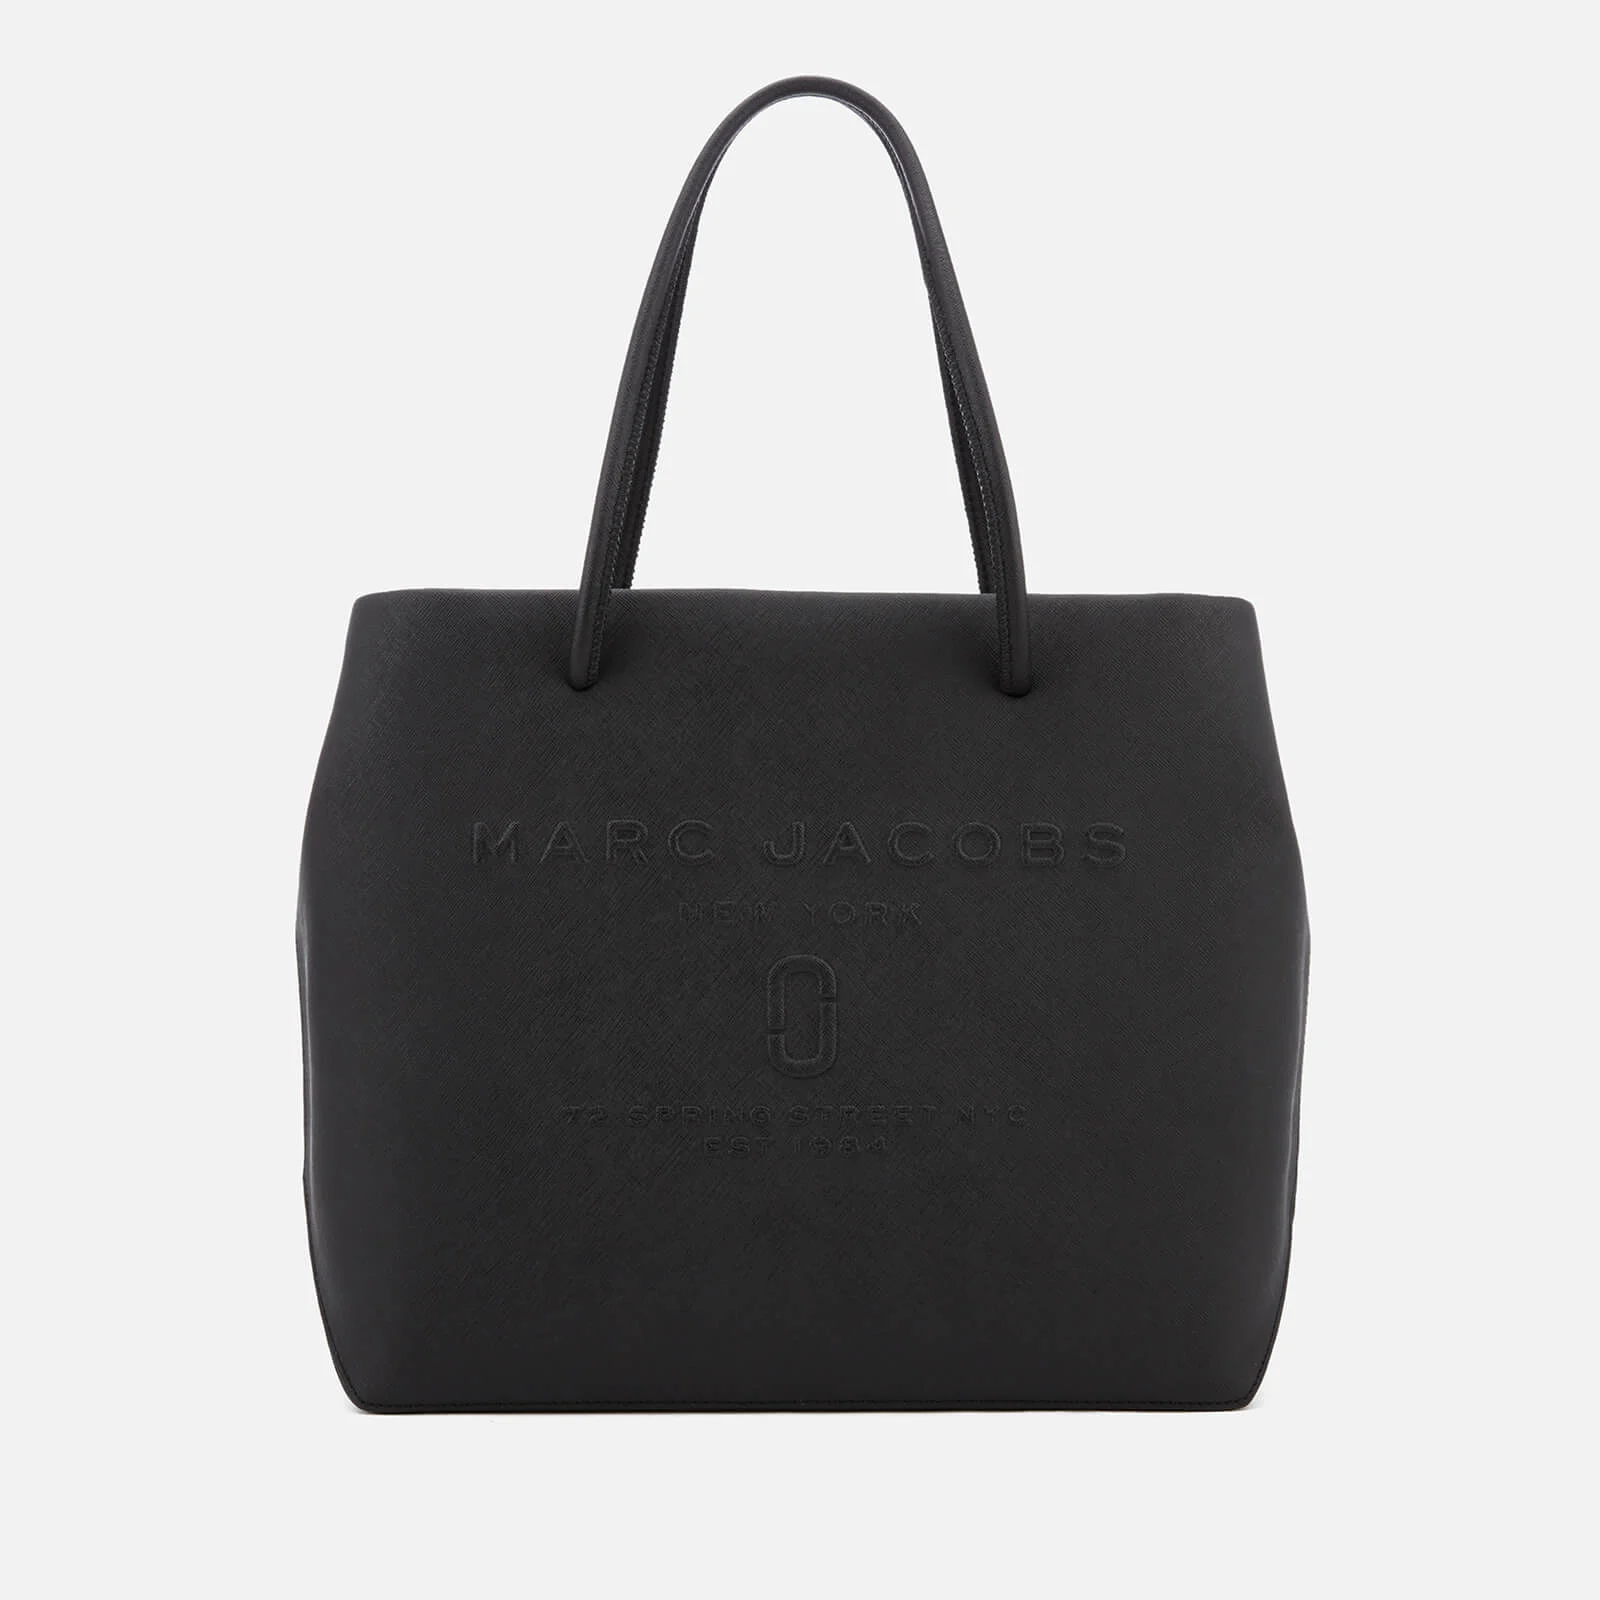 Marc Jacobs Women's Logo Shopper East West Tote Bag - Black Image 1